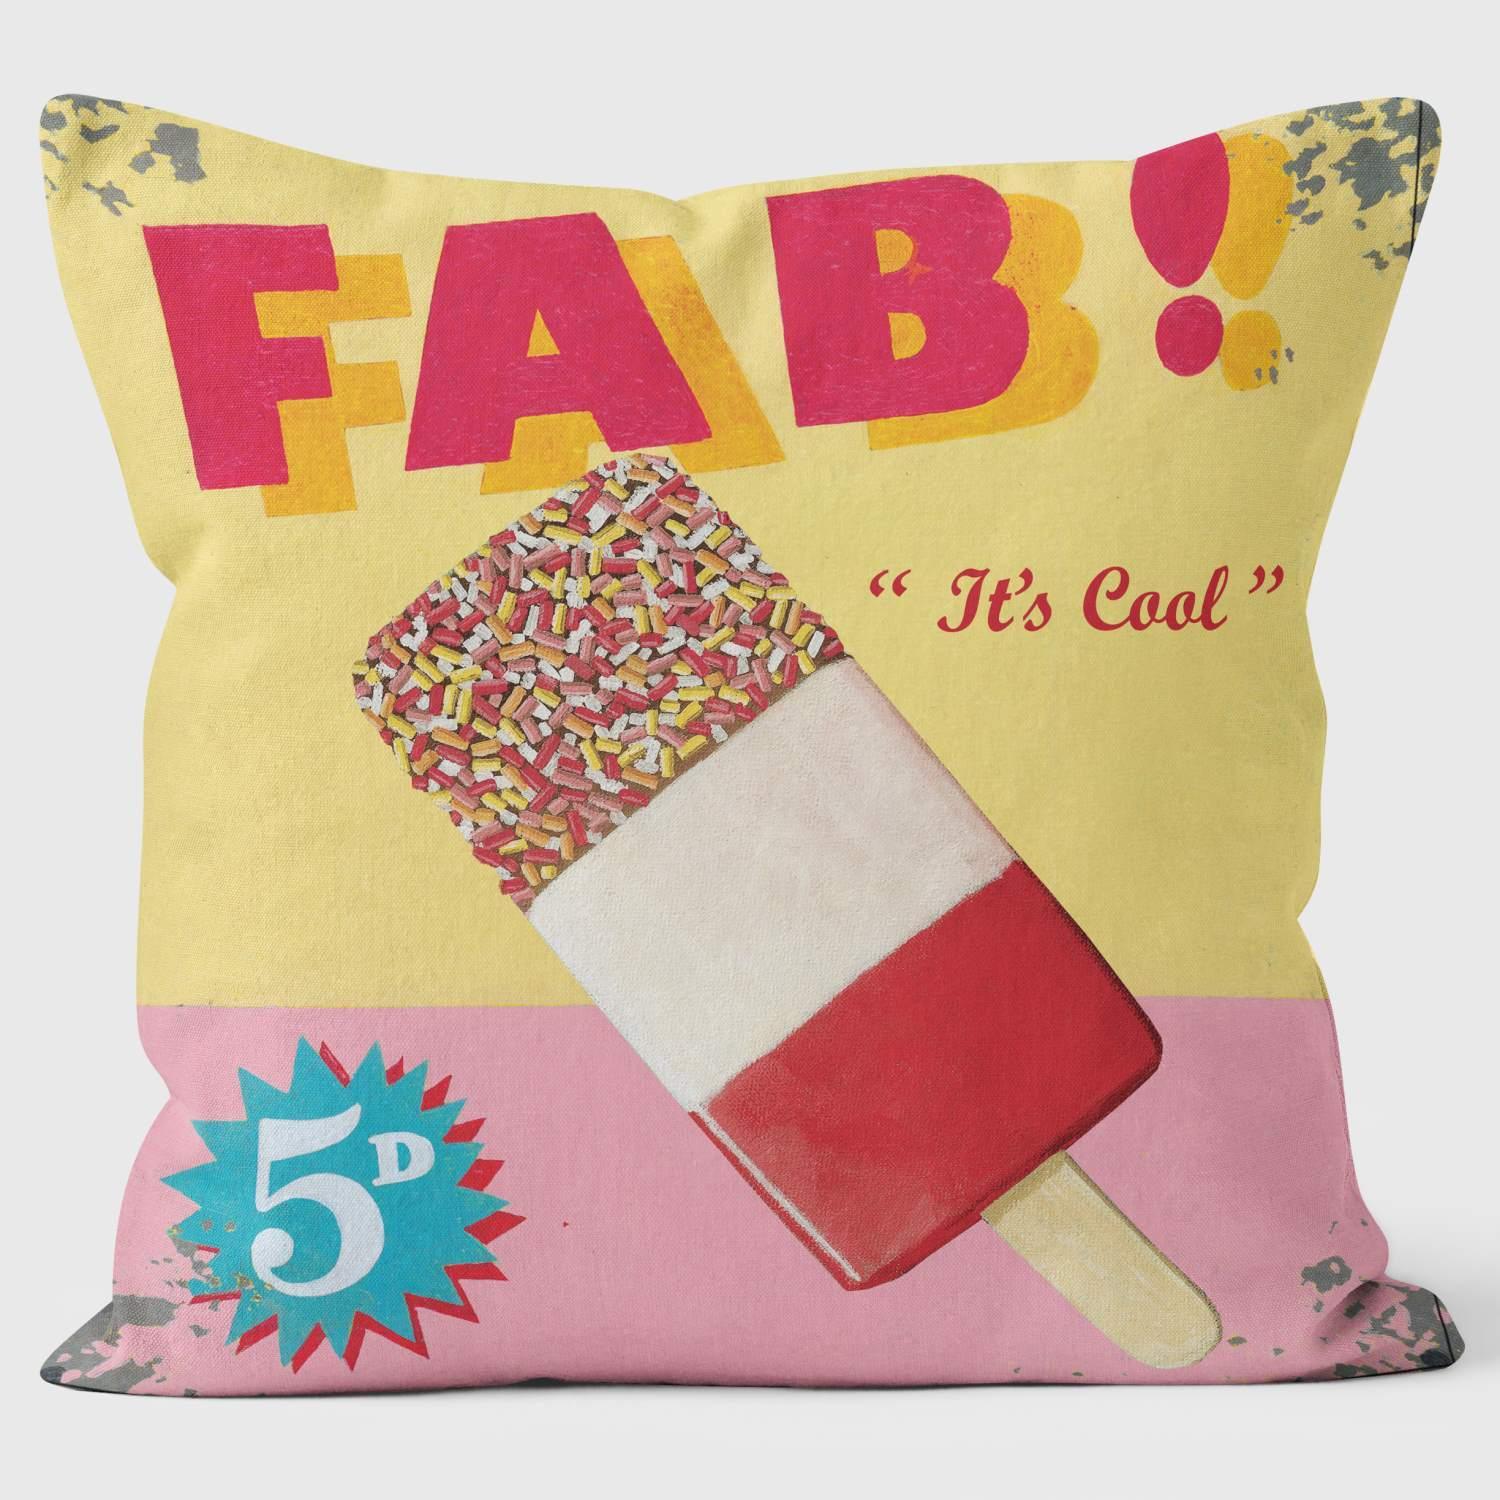 FAB Ice Lolly - Martin Wiscombe - Art Cushion - Handmade Cushions UK - WeLoveCushions